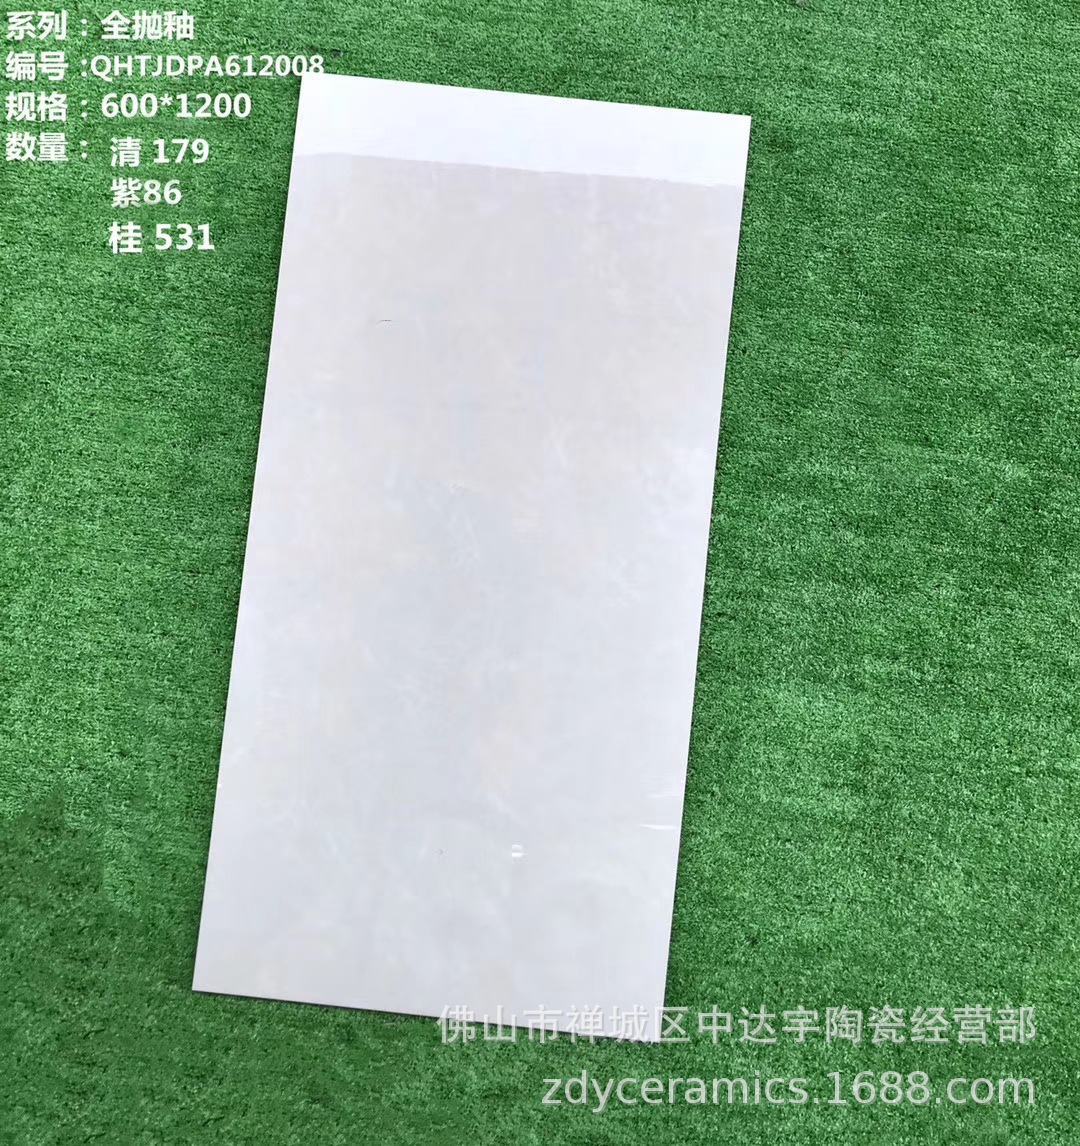 FS全抛釉大理石瓷砖600X1200MM QHTBDPA612033-B客厅卫生间地板砖示例图5